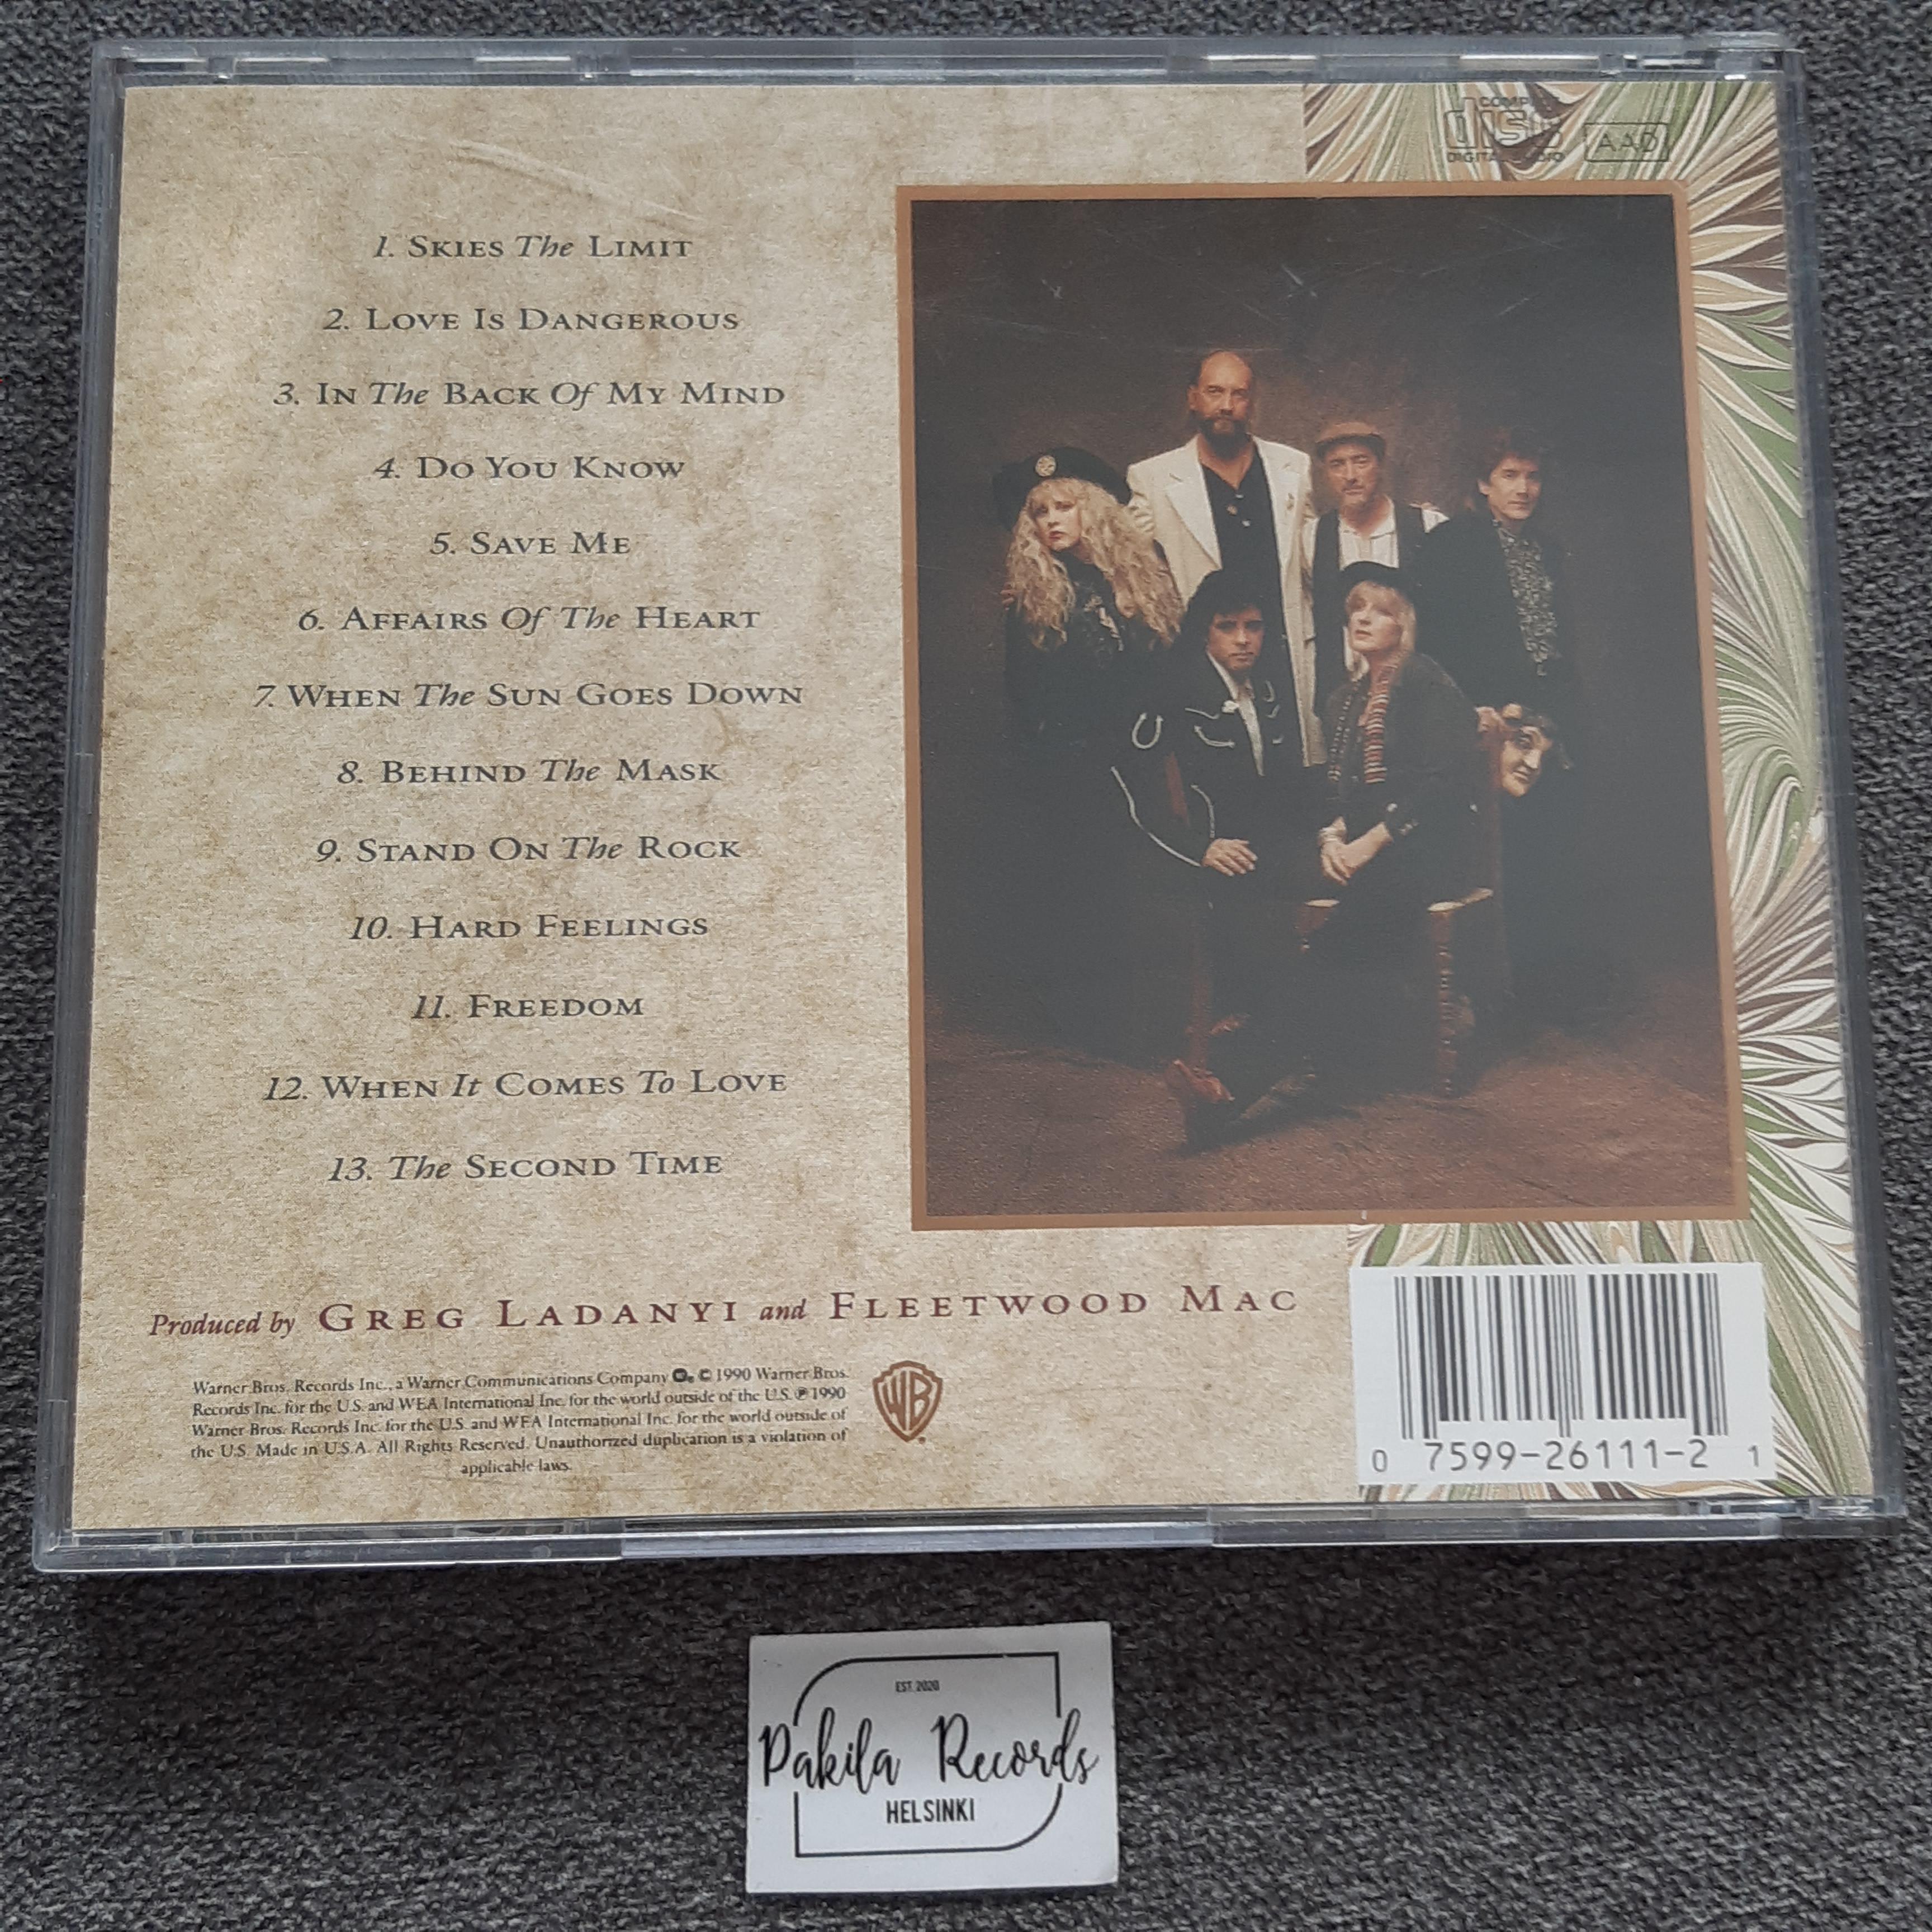 Fleetwood Mac - Behind The Mask - CD (käytetty)